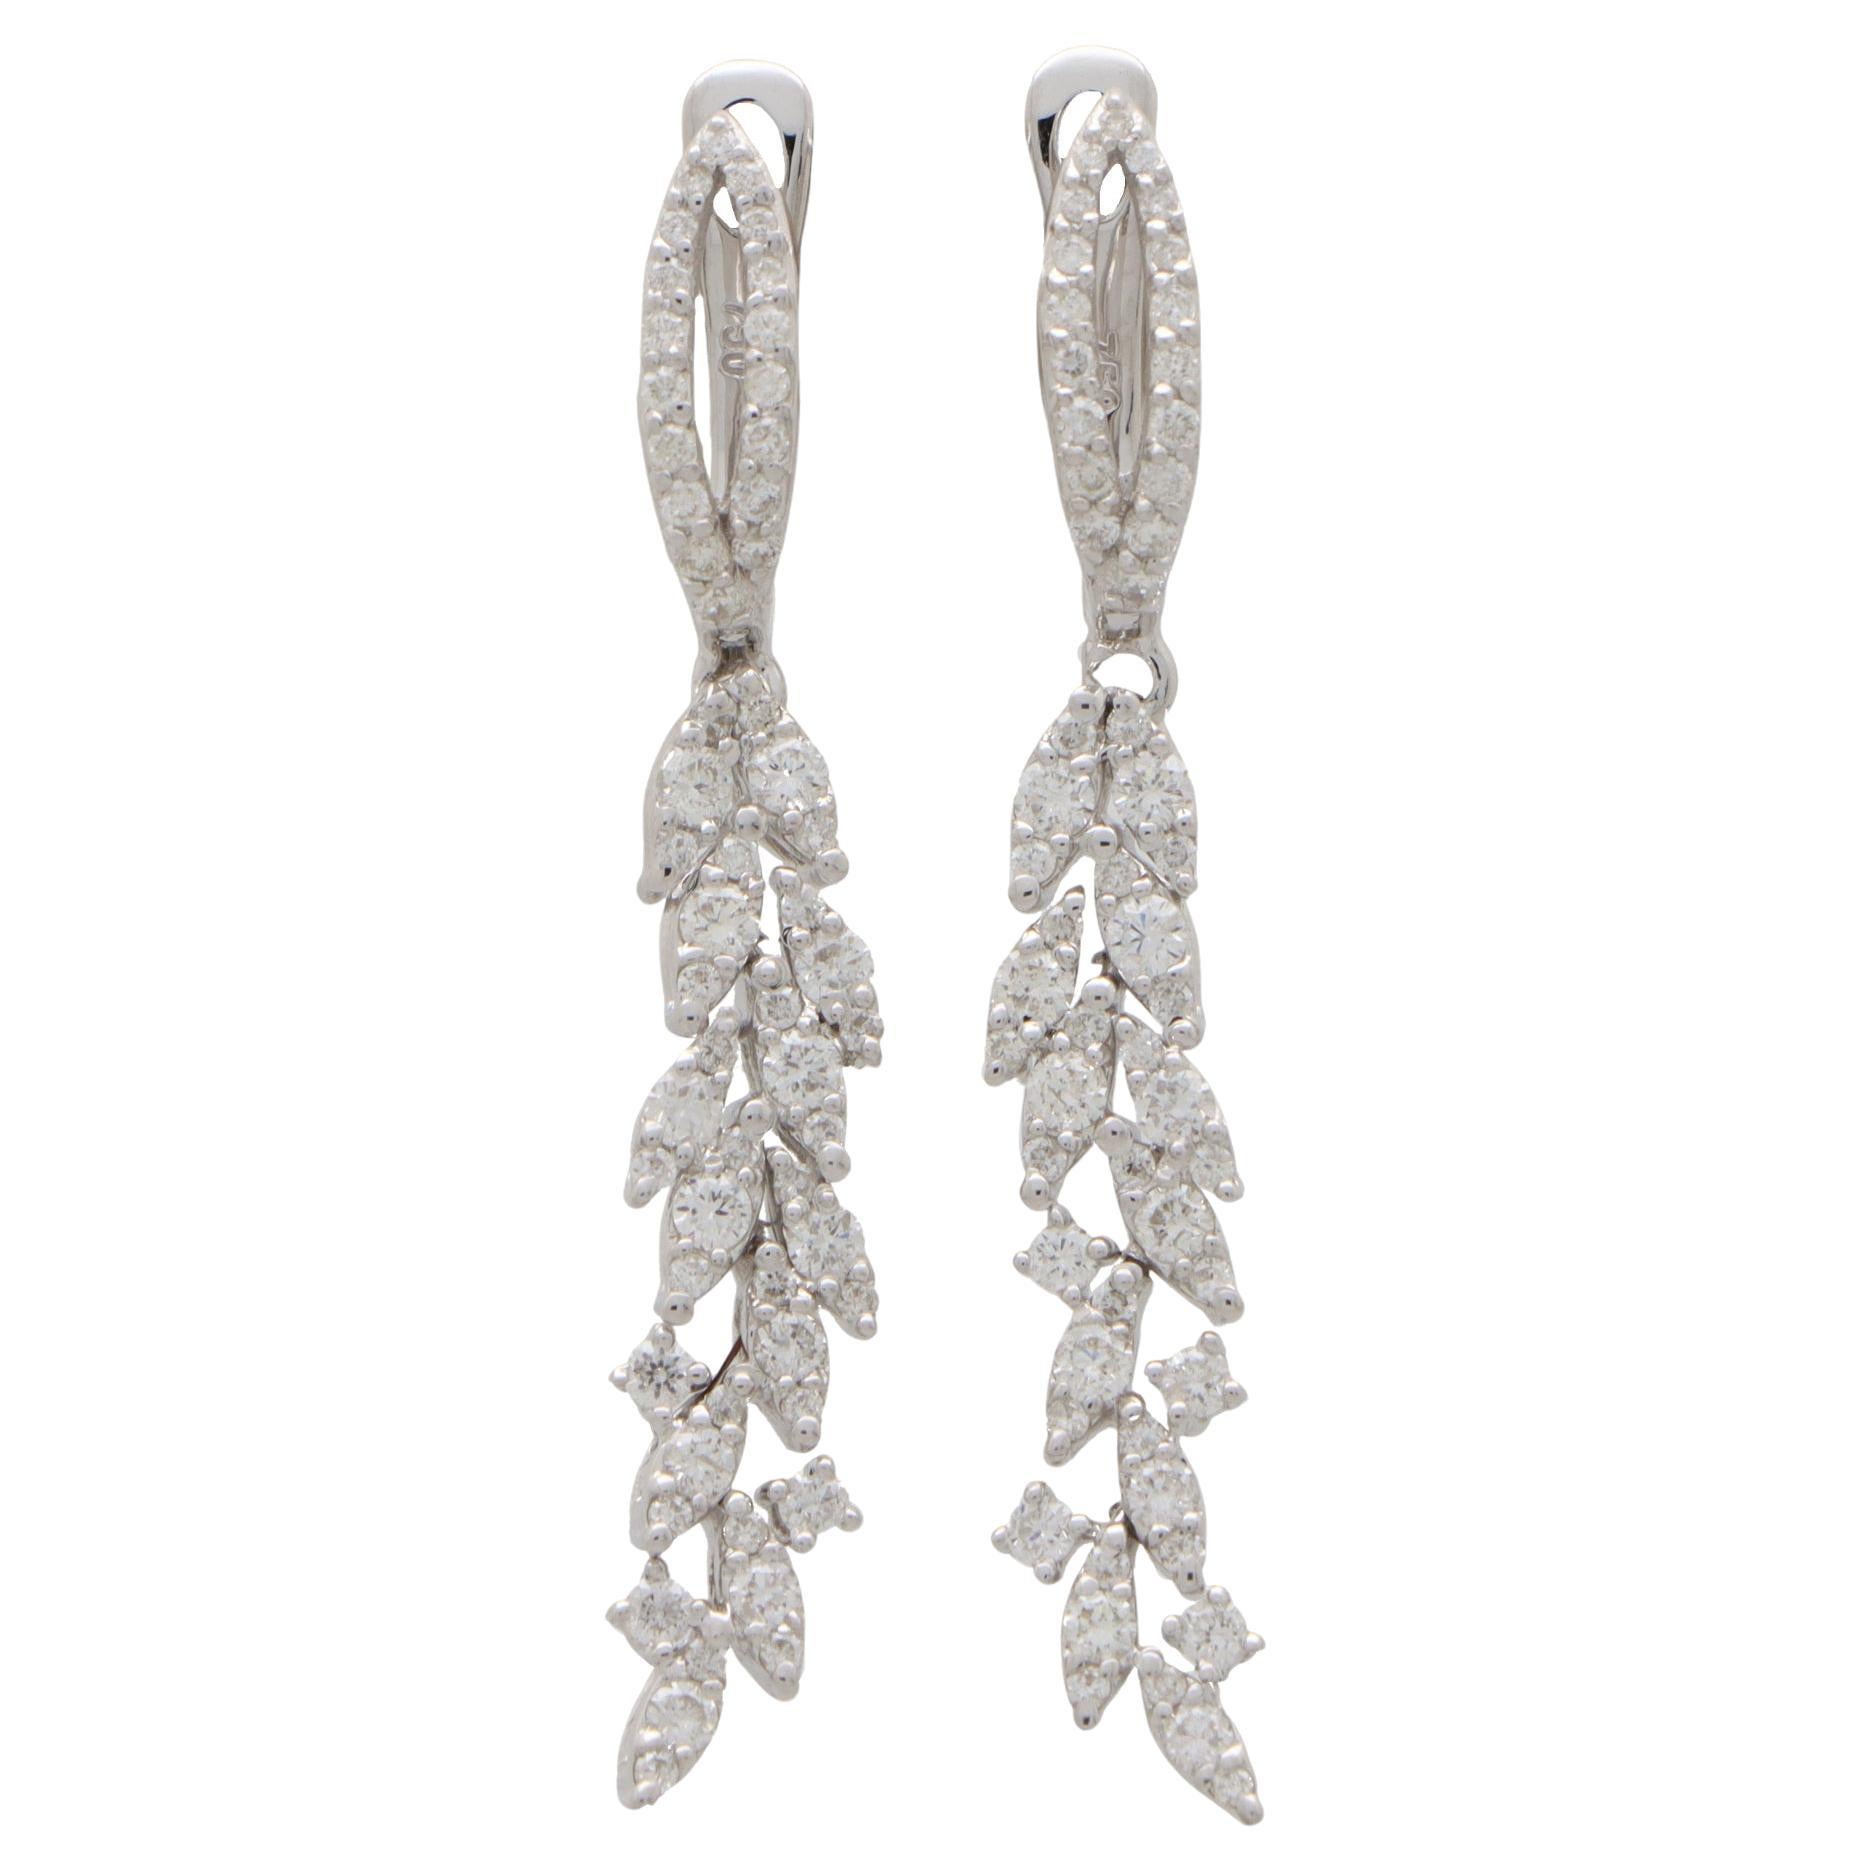  Contemporary Leaf Diamond Drop Earrings Set in 18k White Gold